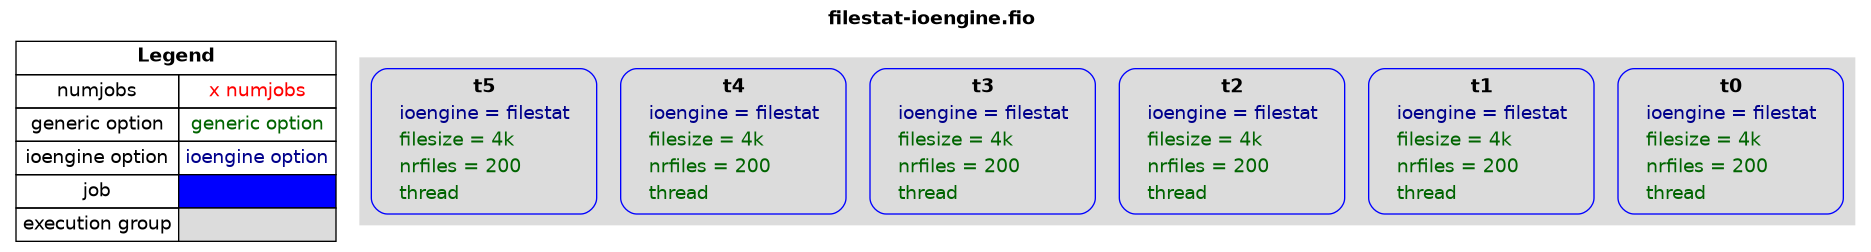 examples/filestat-ioengine.png